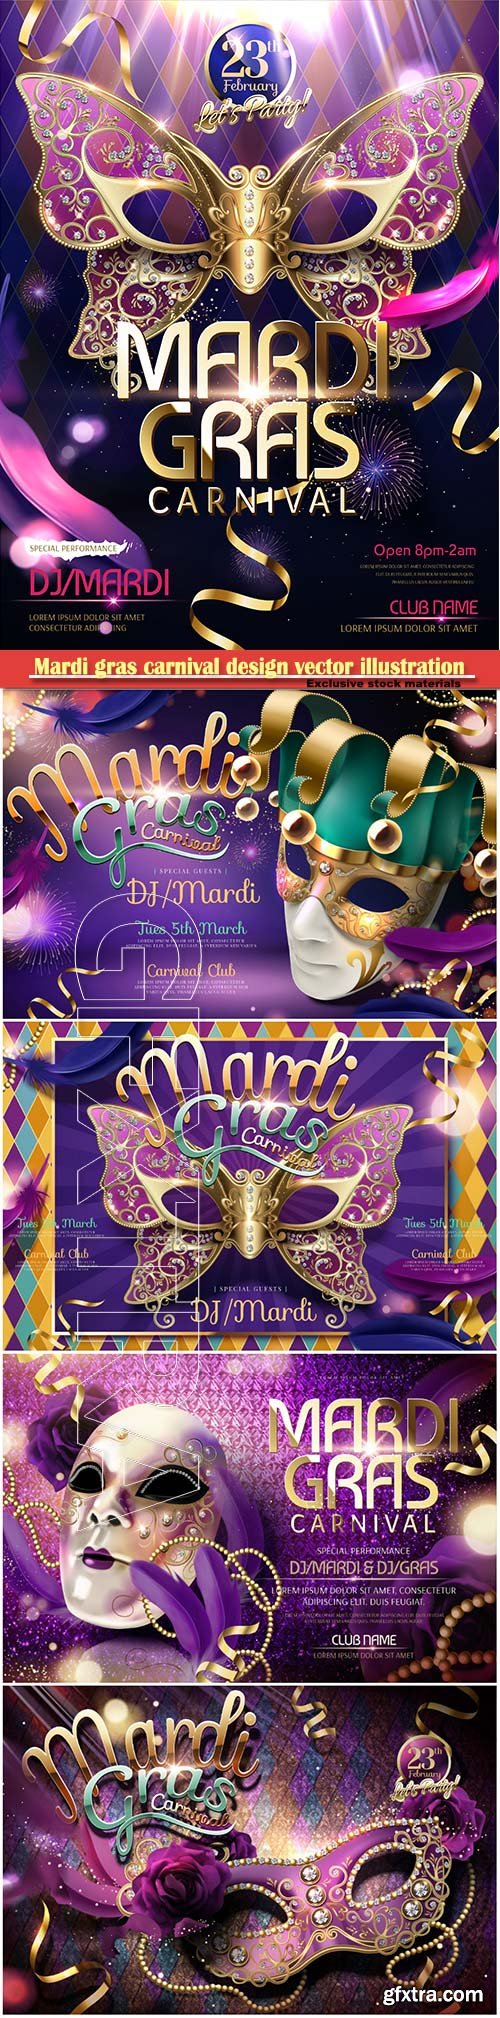 Mardi gras carnival design vector illustration